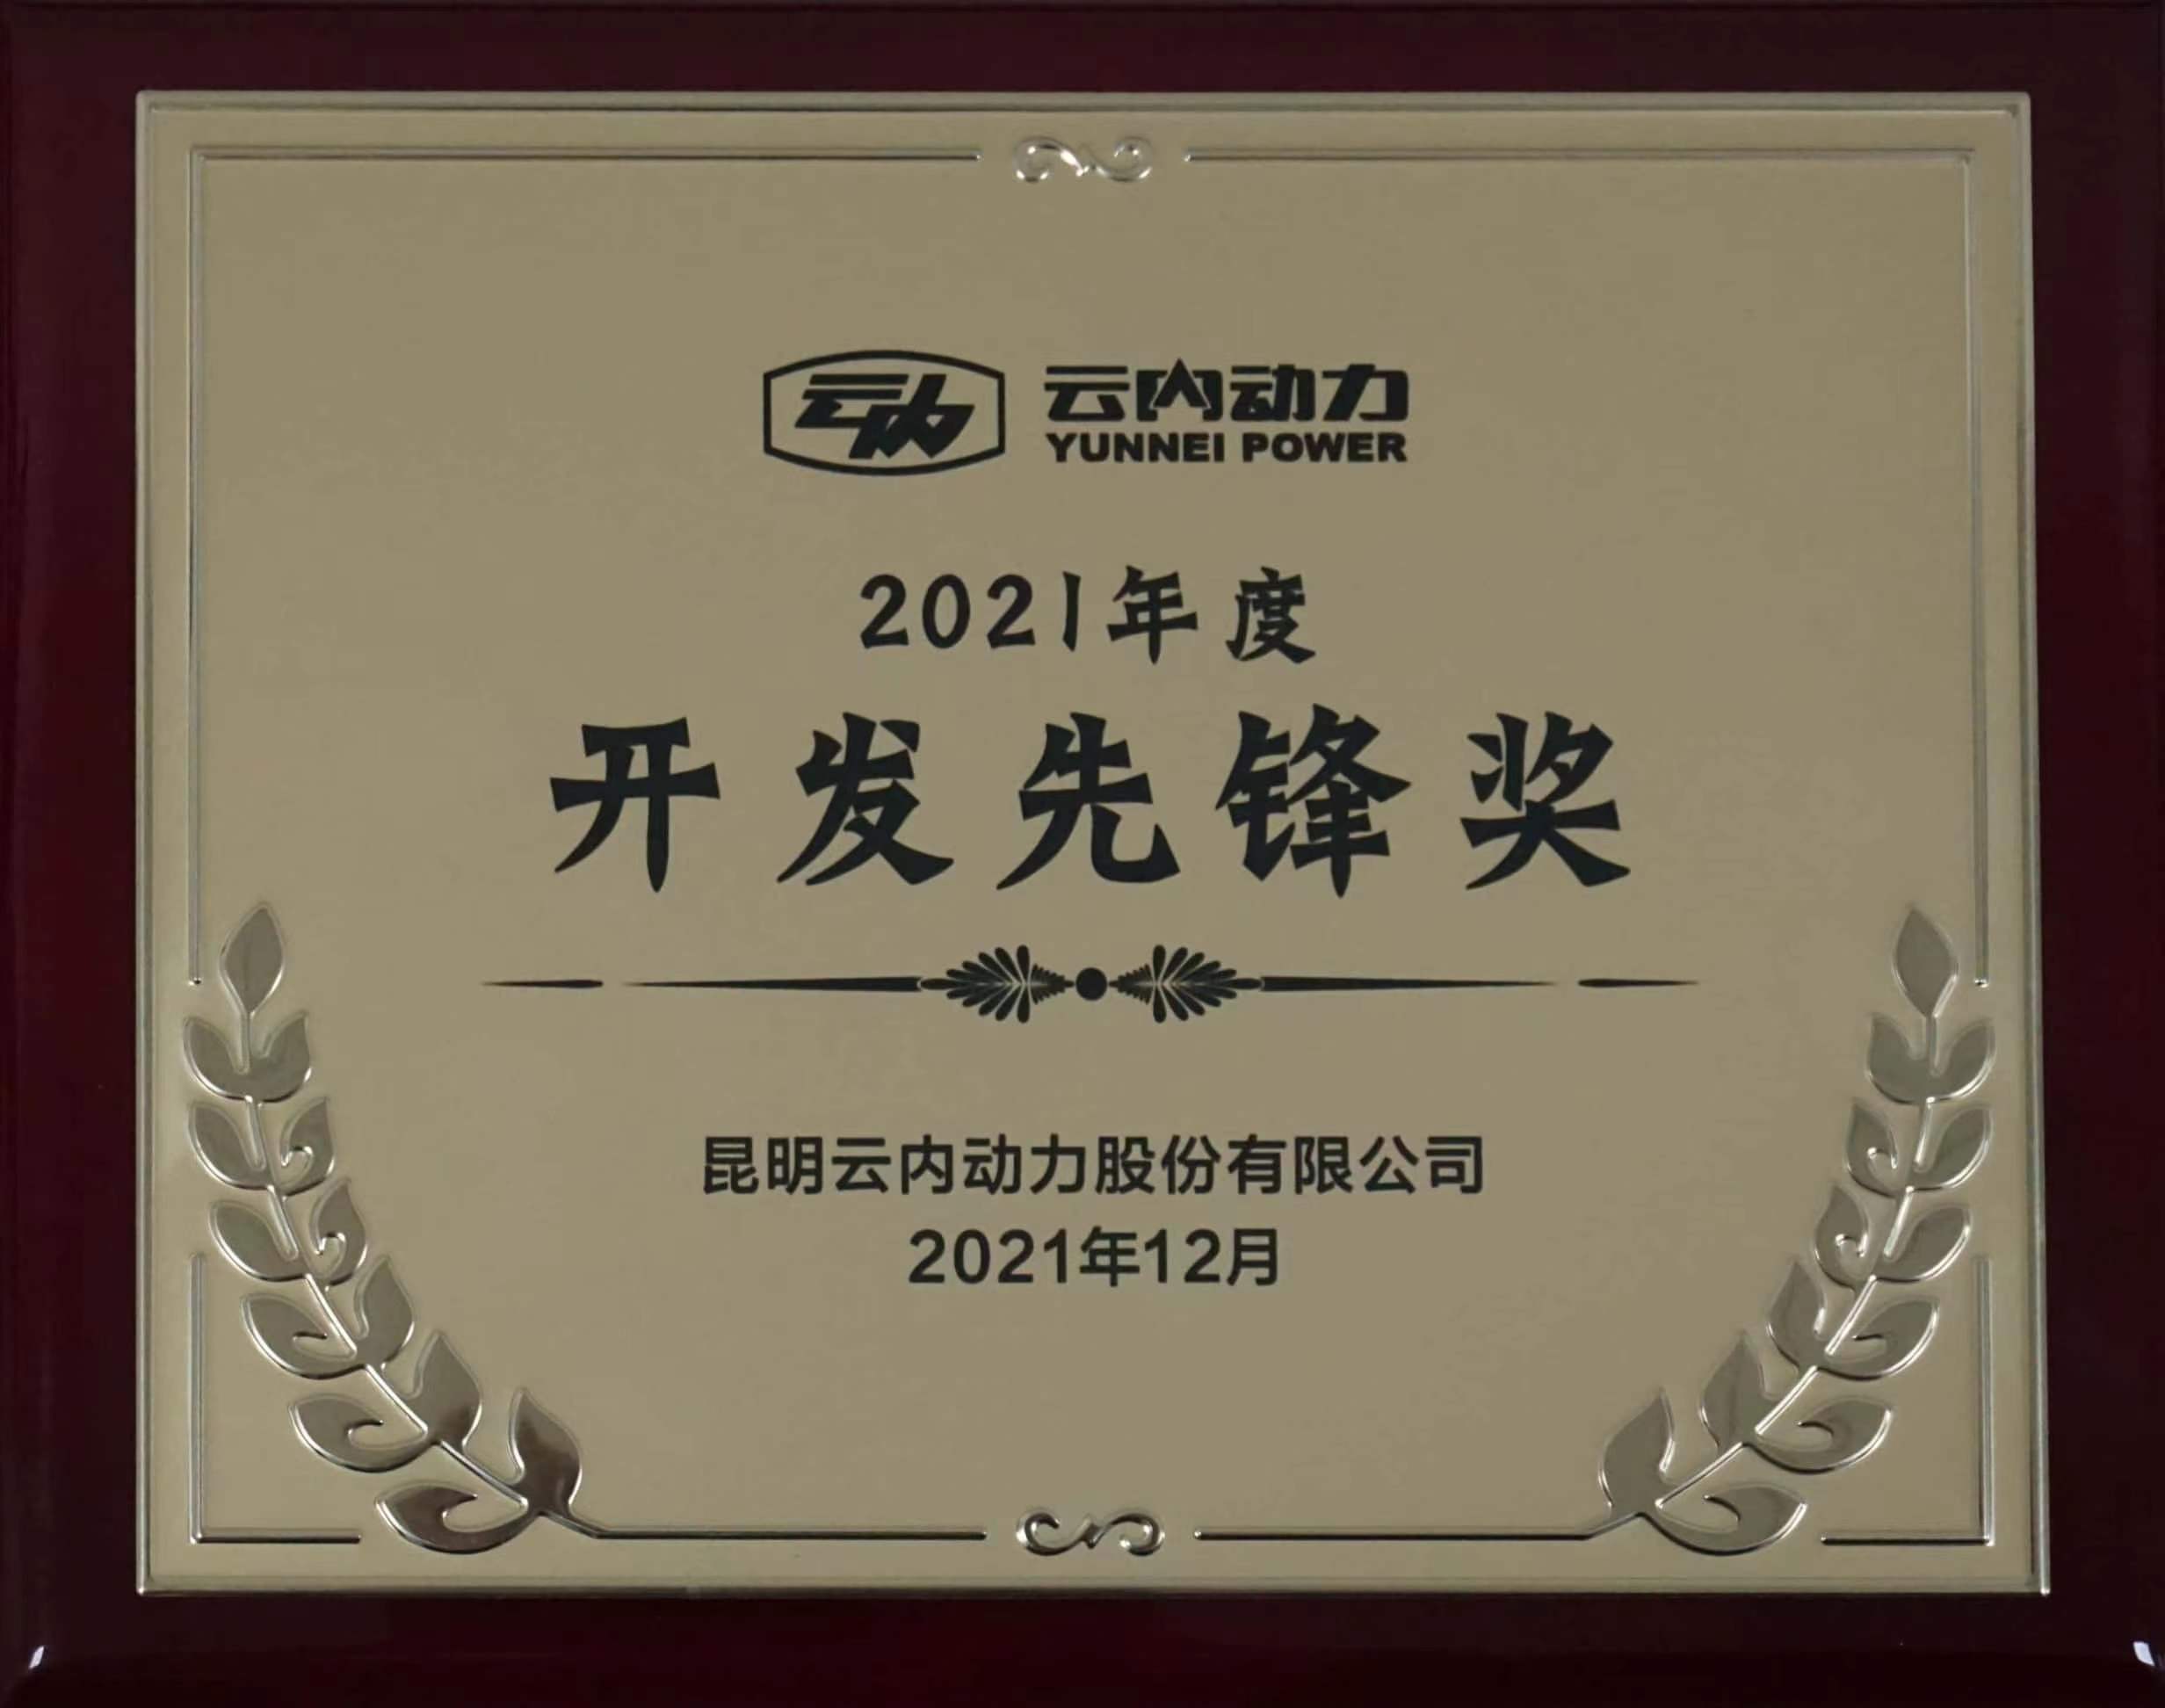 Development Pioneer Award of 2021 from Yunnei Power